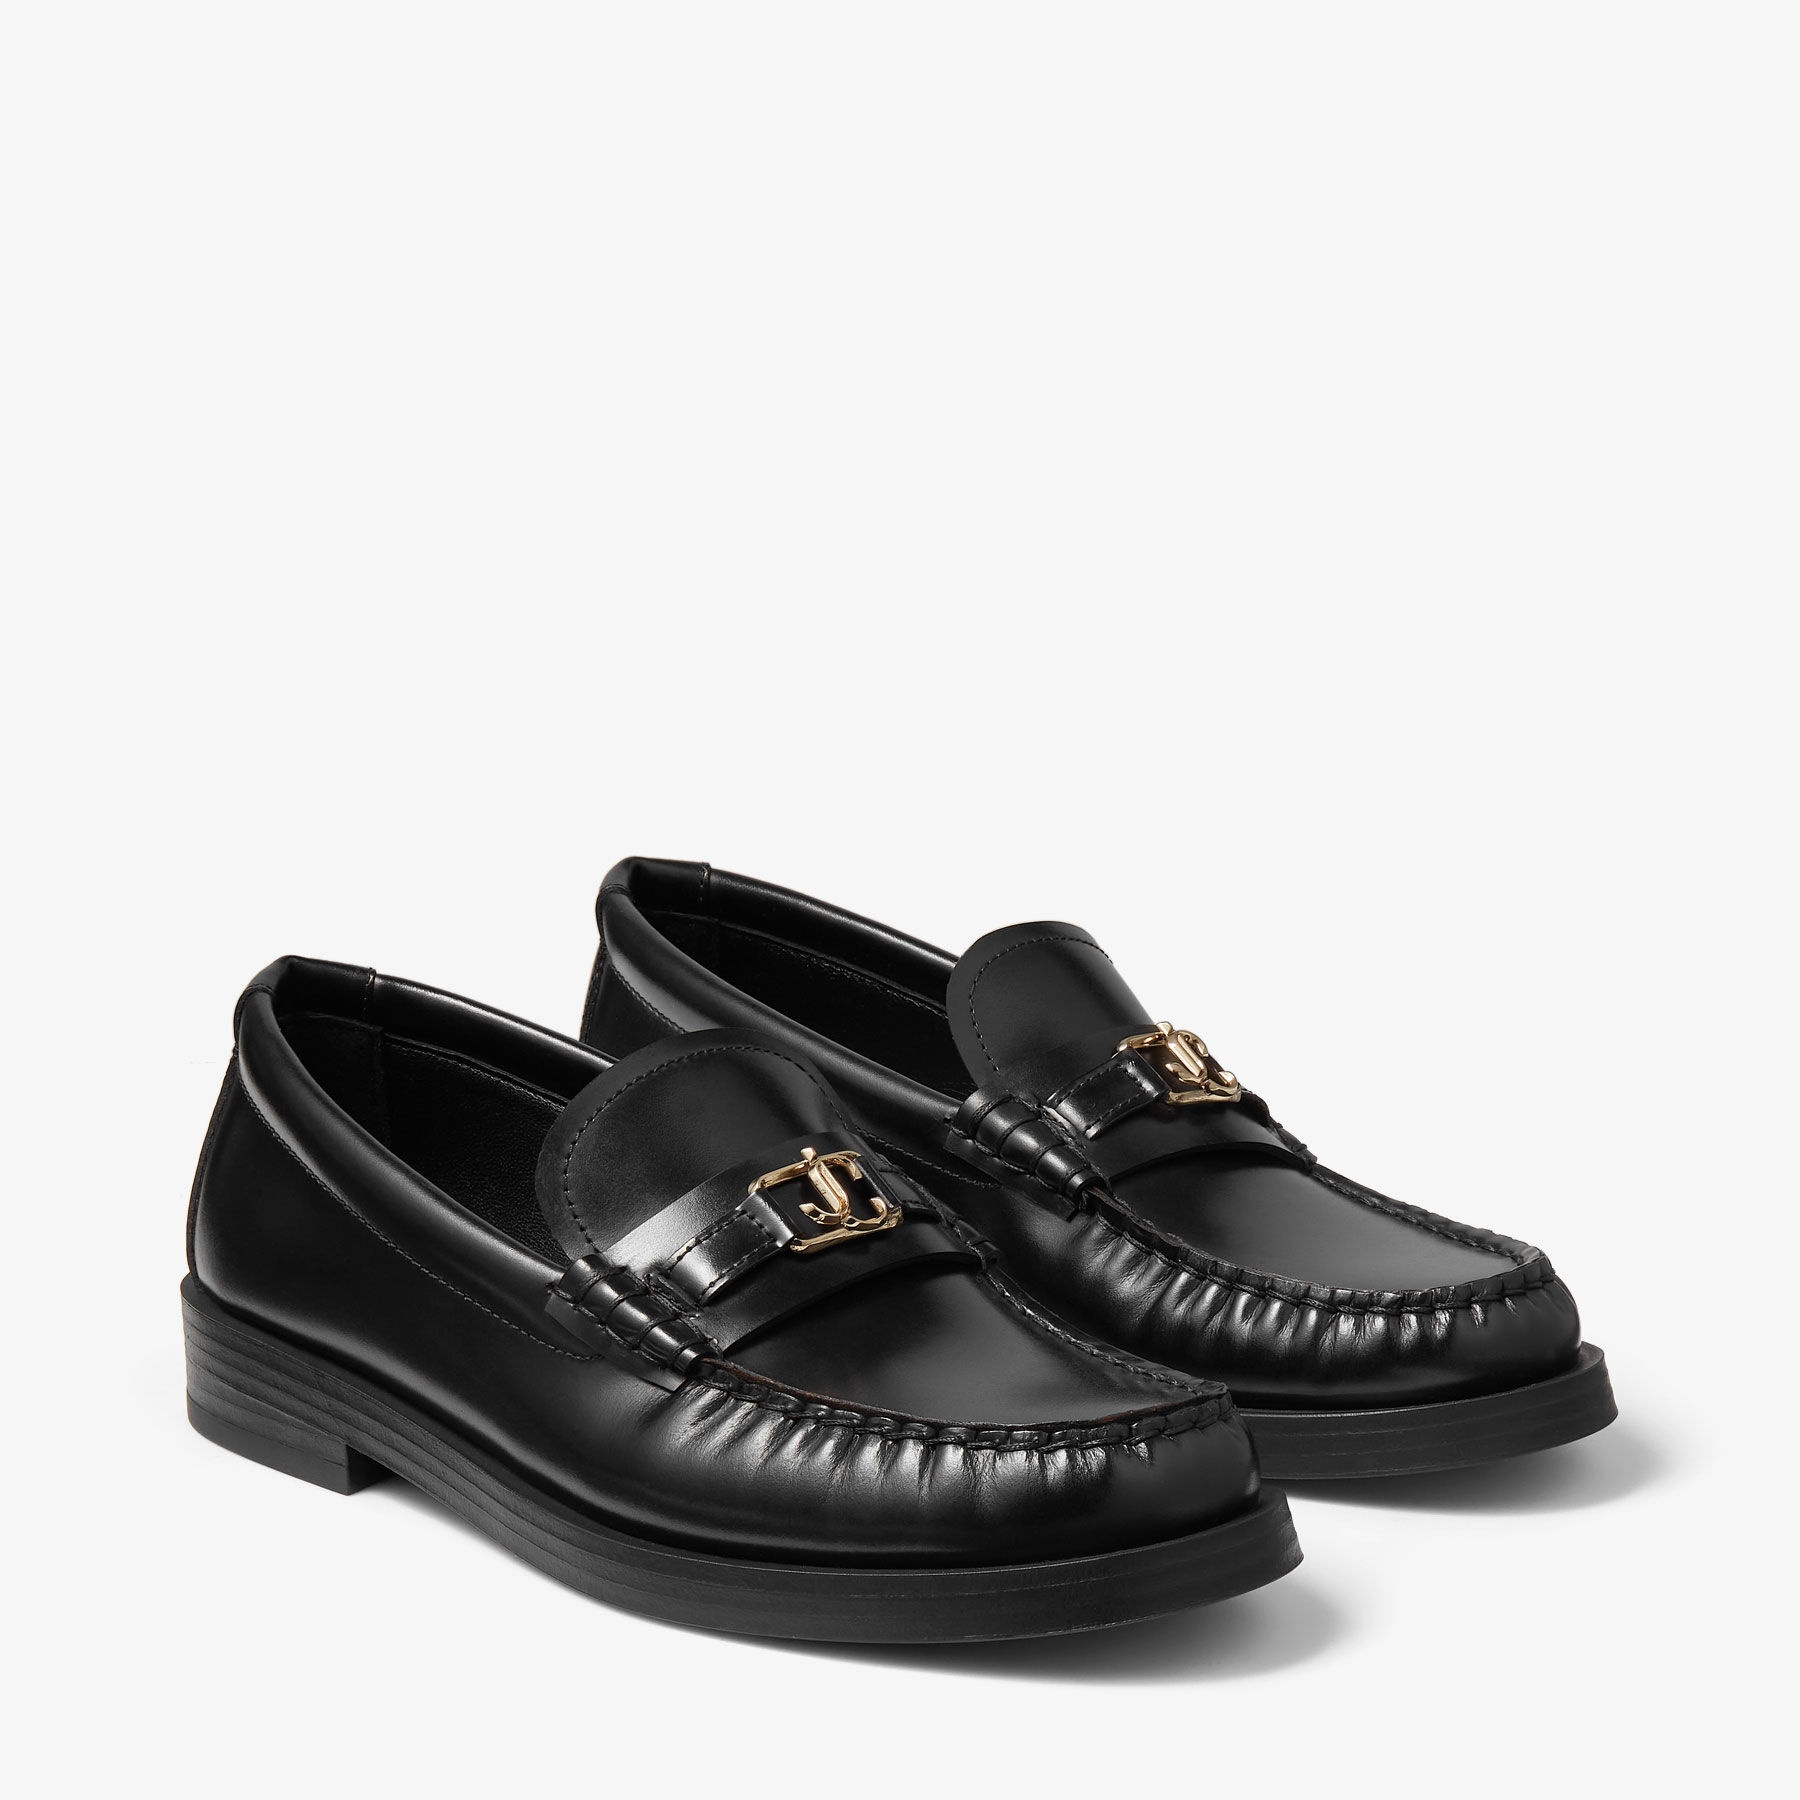 Addie/JC
Black Box Calf Leather Flat Loafers with JC Emblem - 2